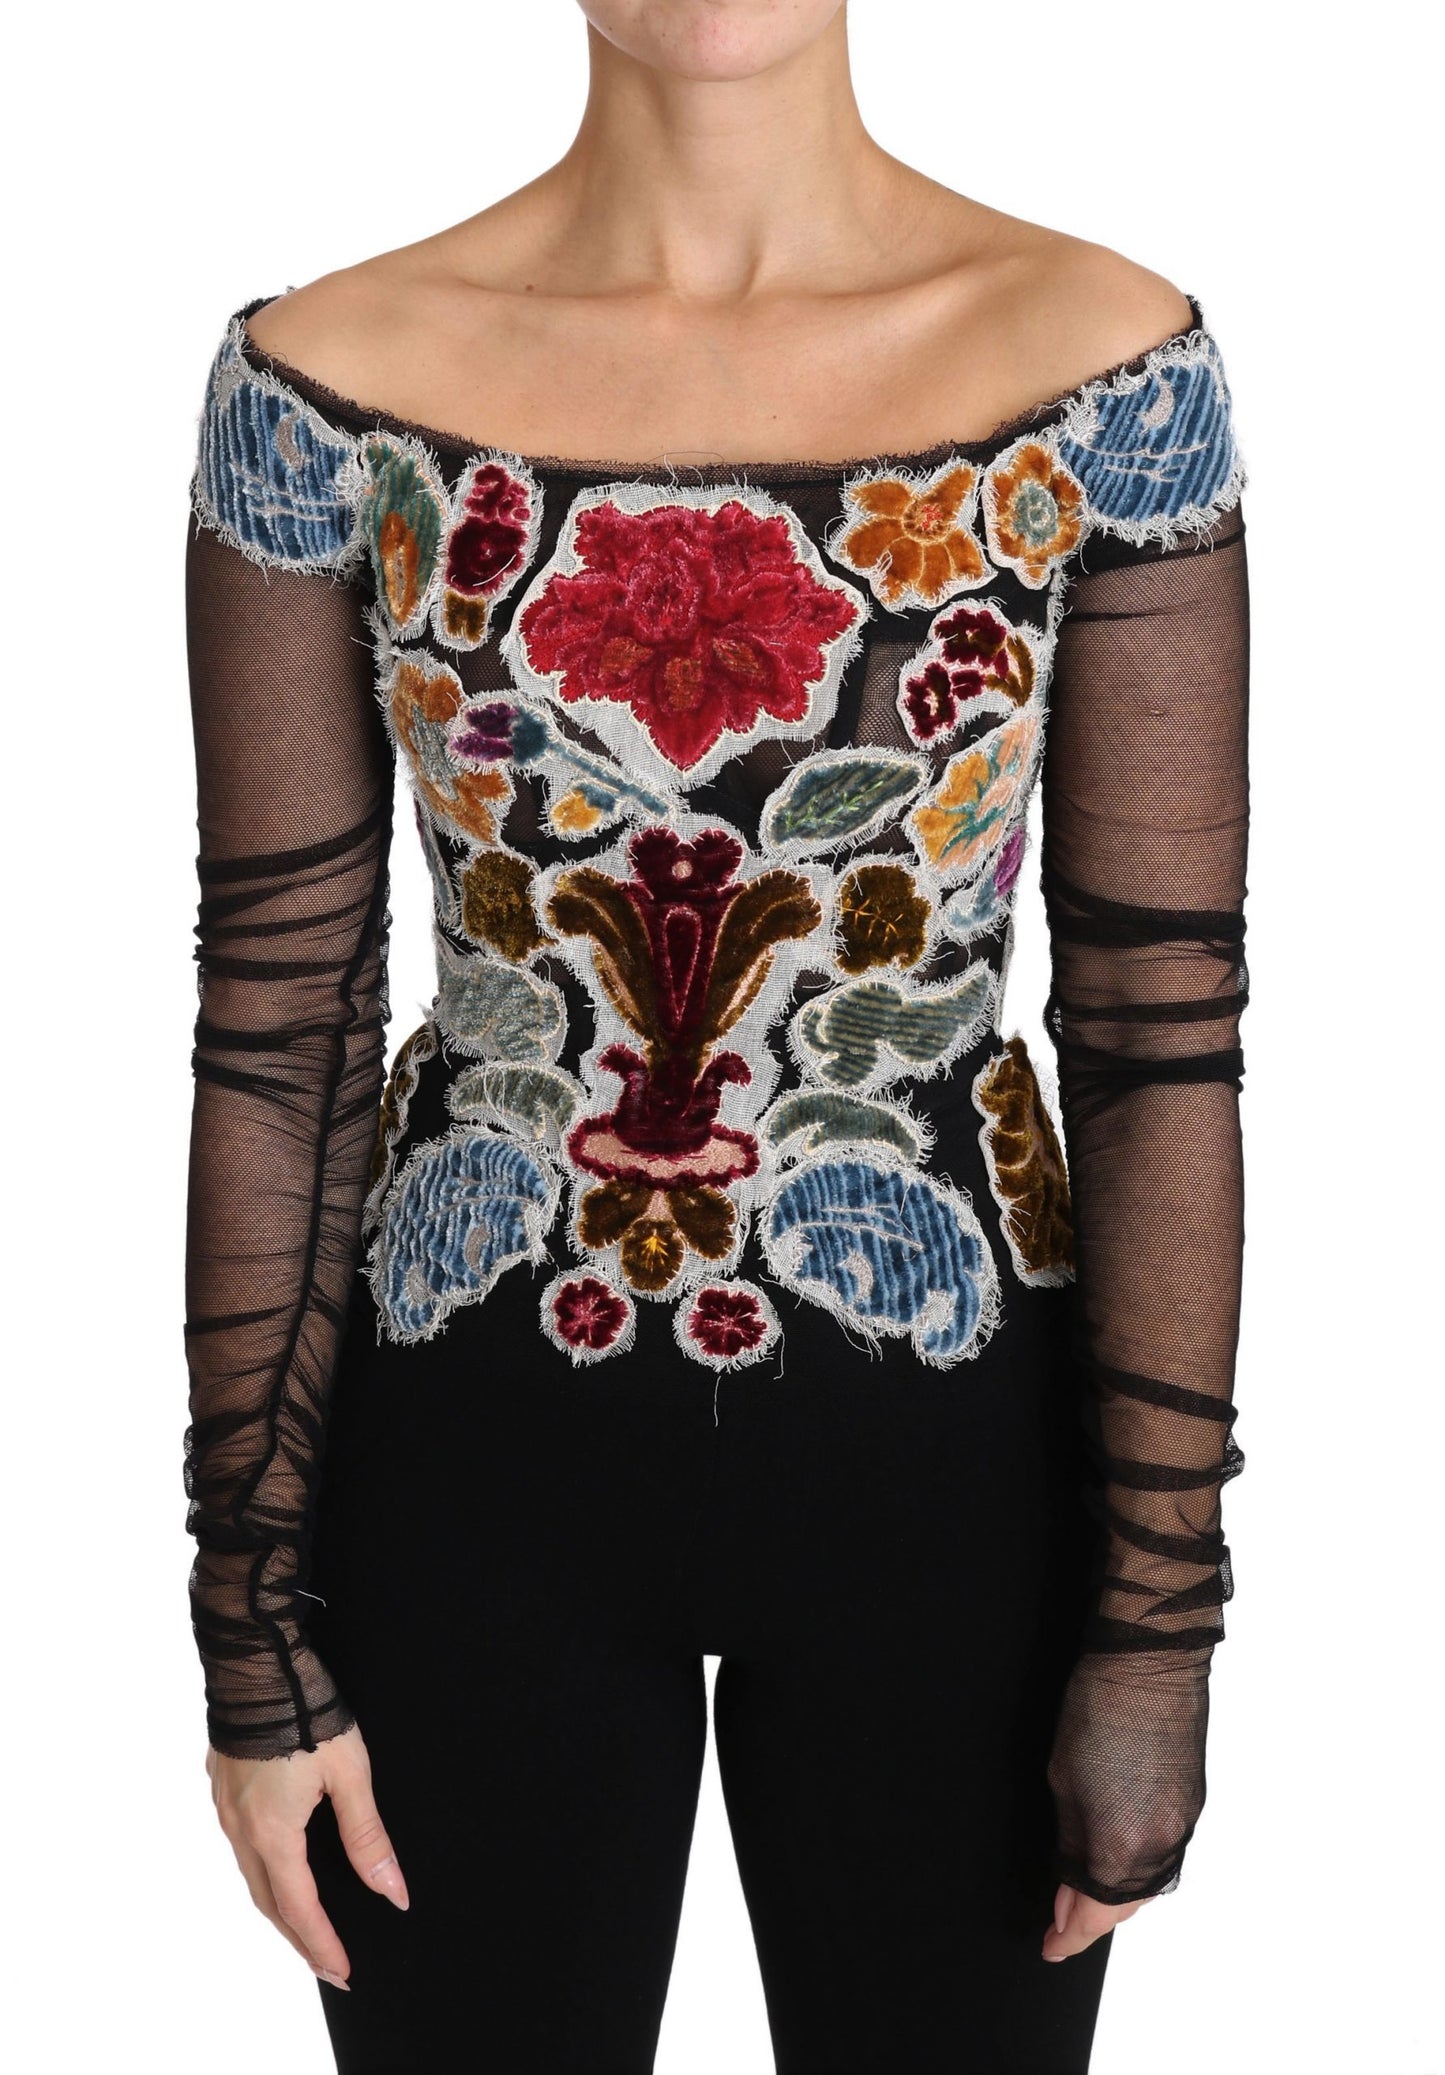 Dolce & Gabbana Black Floral Ricamo Top T-shirt Blouse